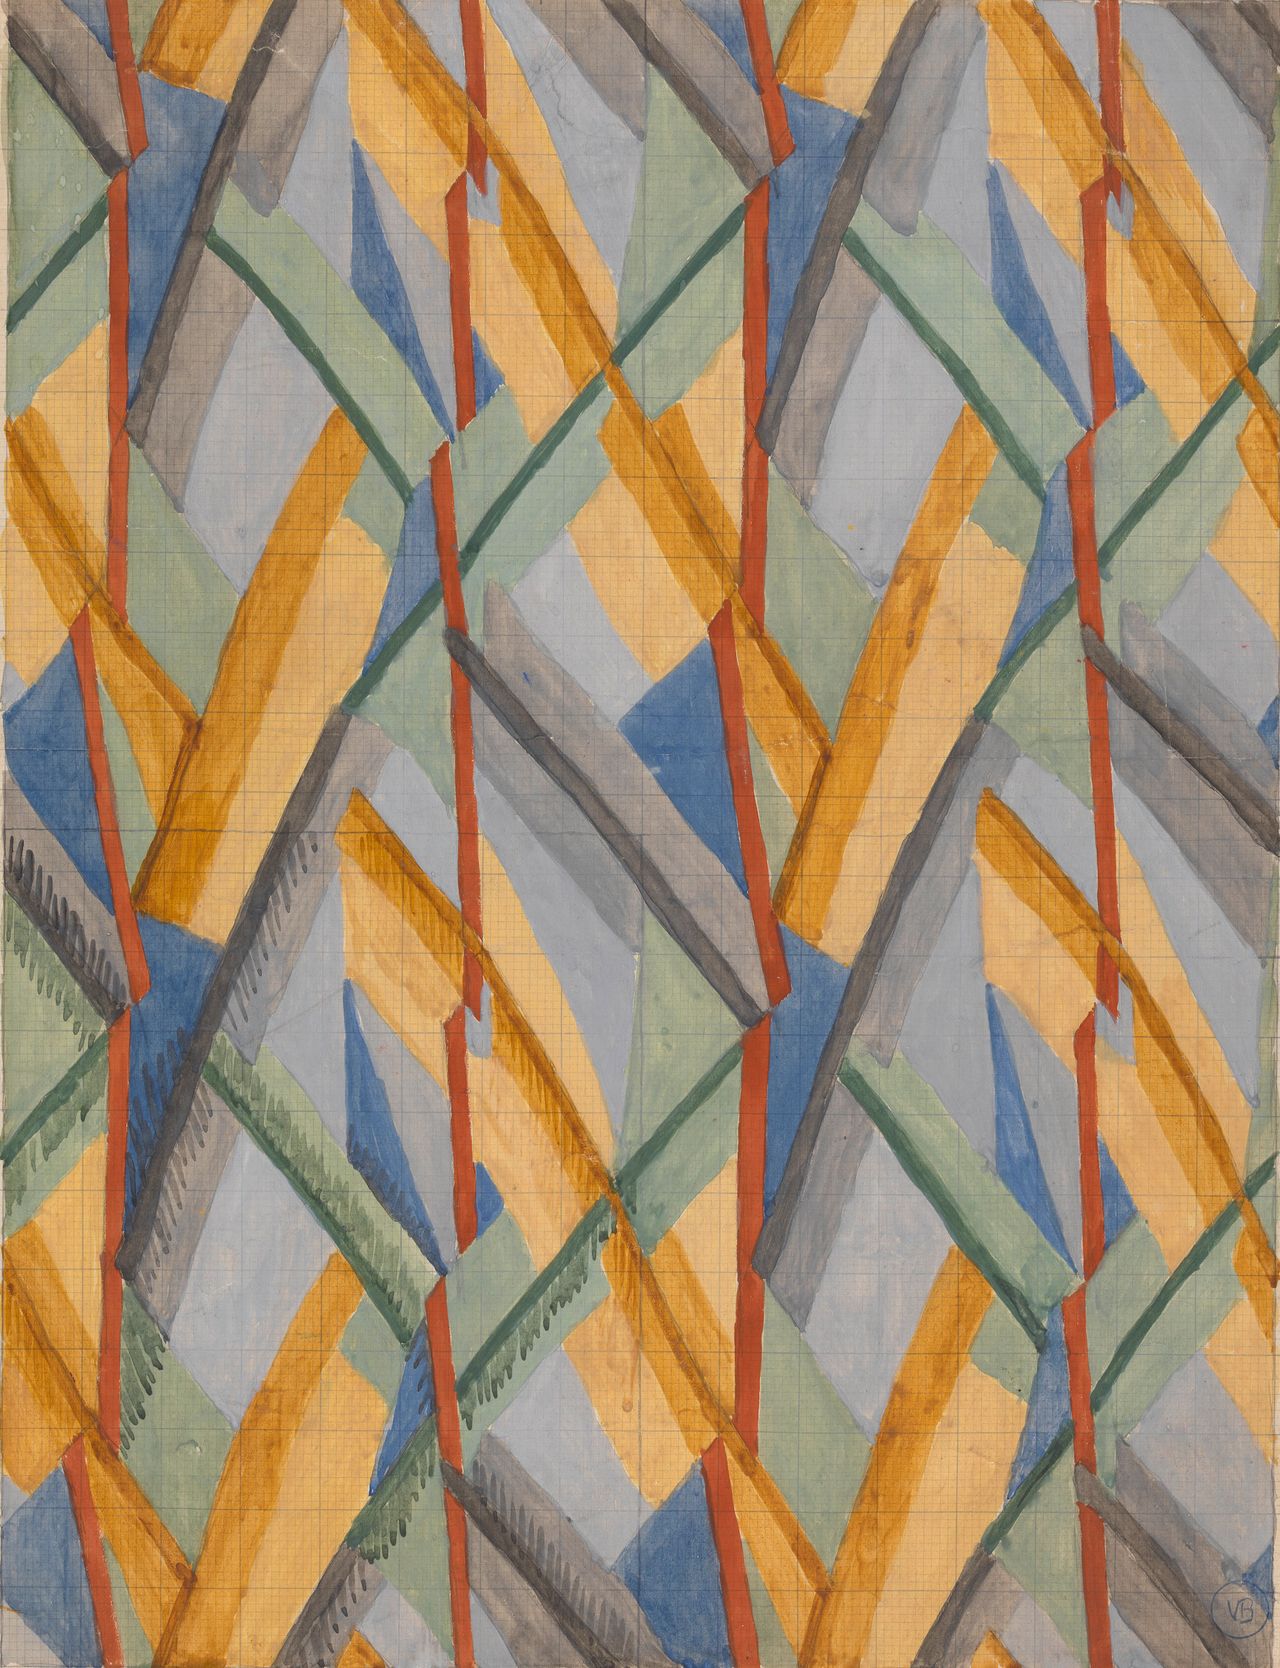 Vanessa Bell 1879–1961, Design for Omega Workshops Fabric, 1913, Watercolor, gouache, and graphite, Yale Center for British Art, Paul Mellon Fund. © The Estate of Vanessa Bell, courtesy of Henrietta Garnett